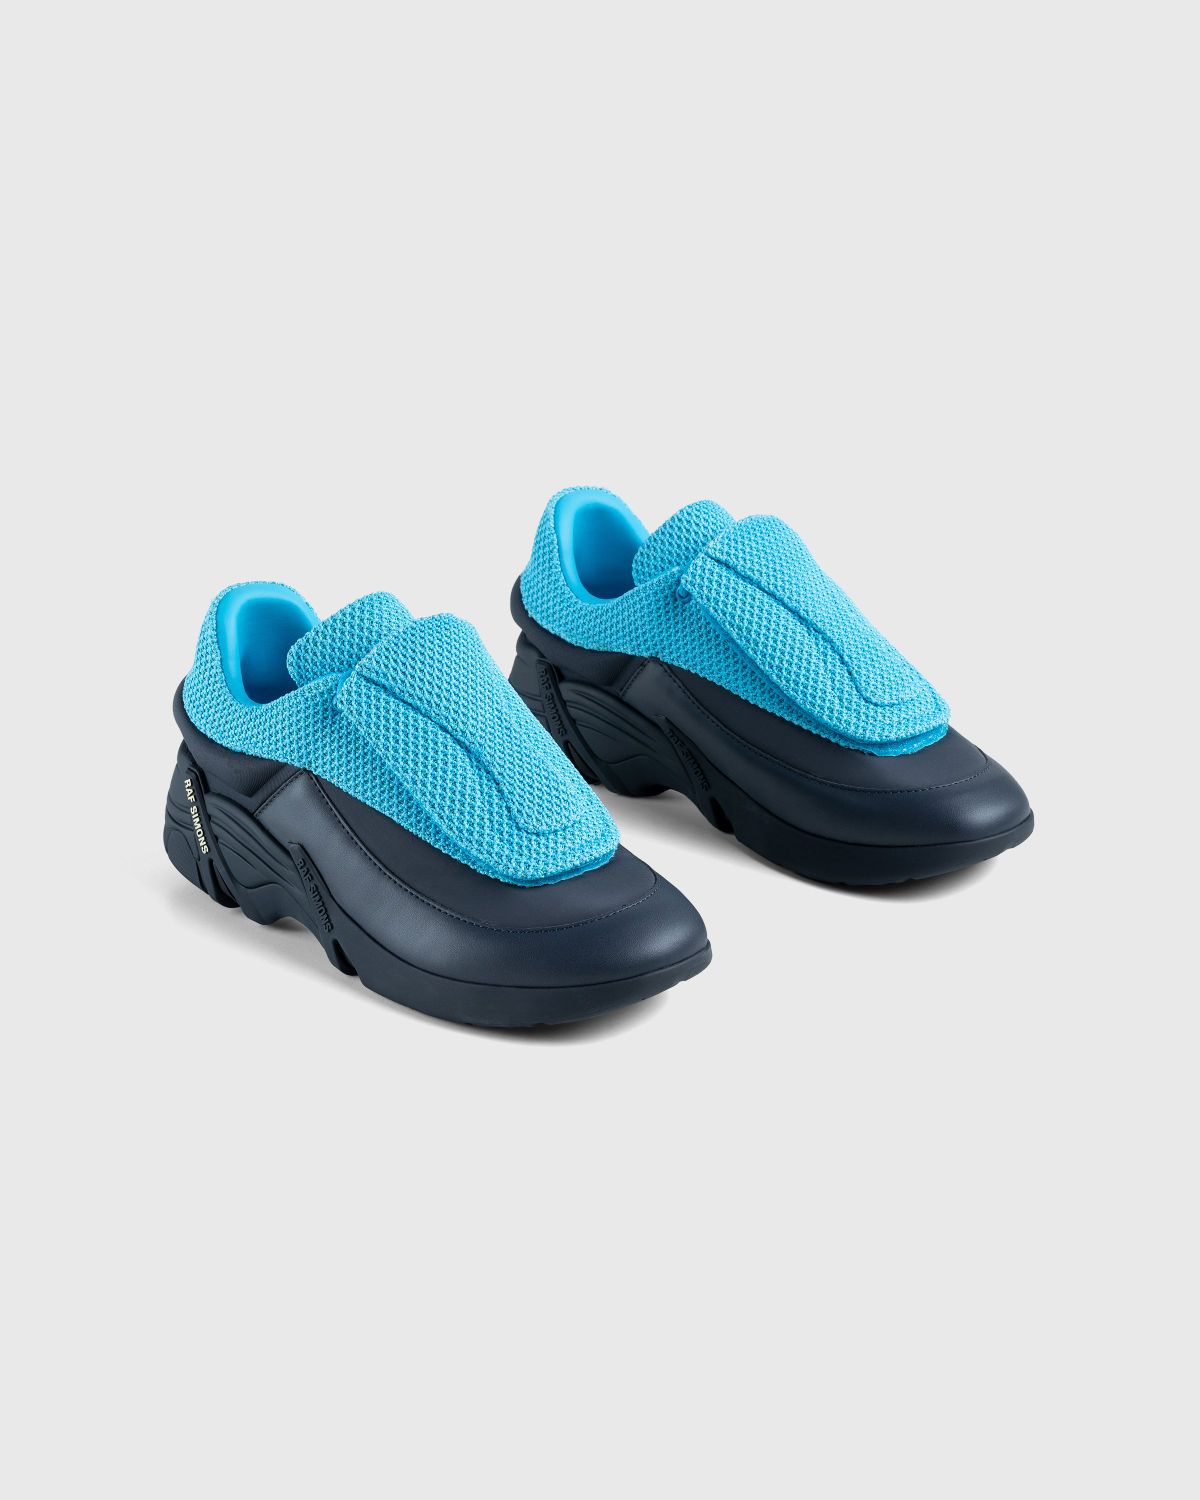 Raf Simons – Antei Aqua - Sneakers - Blue - Image 3